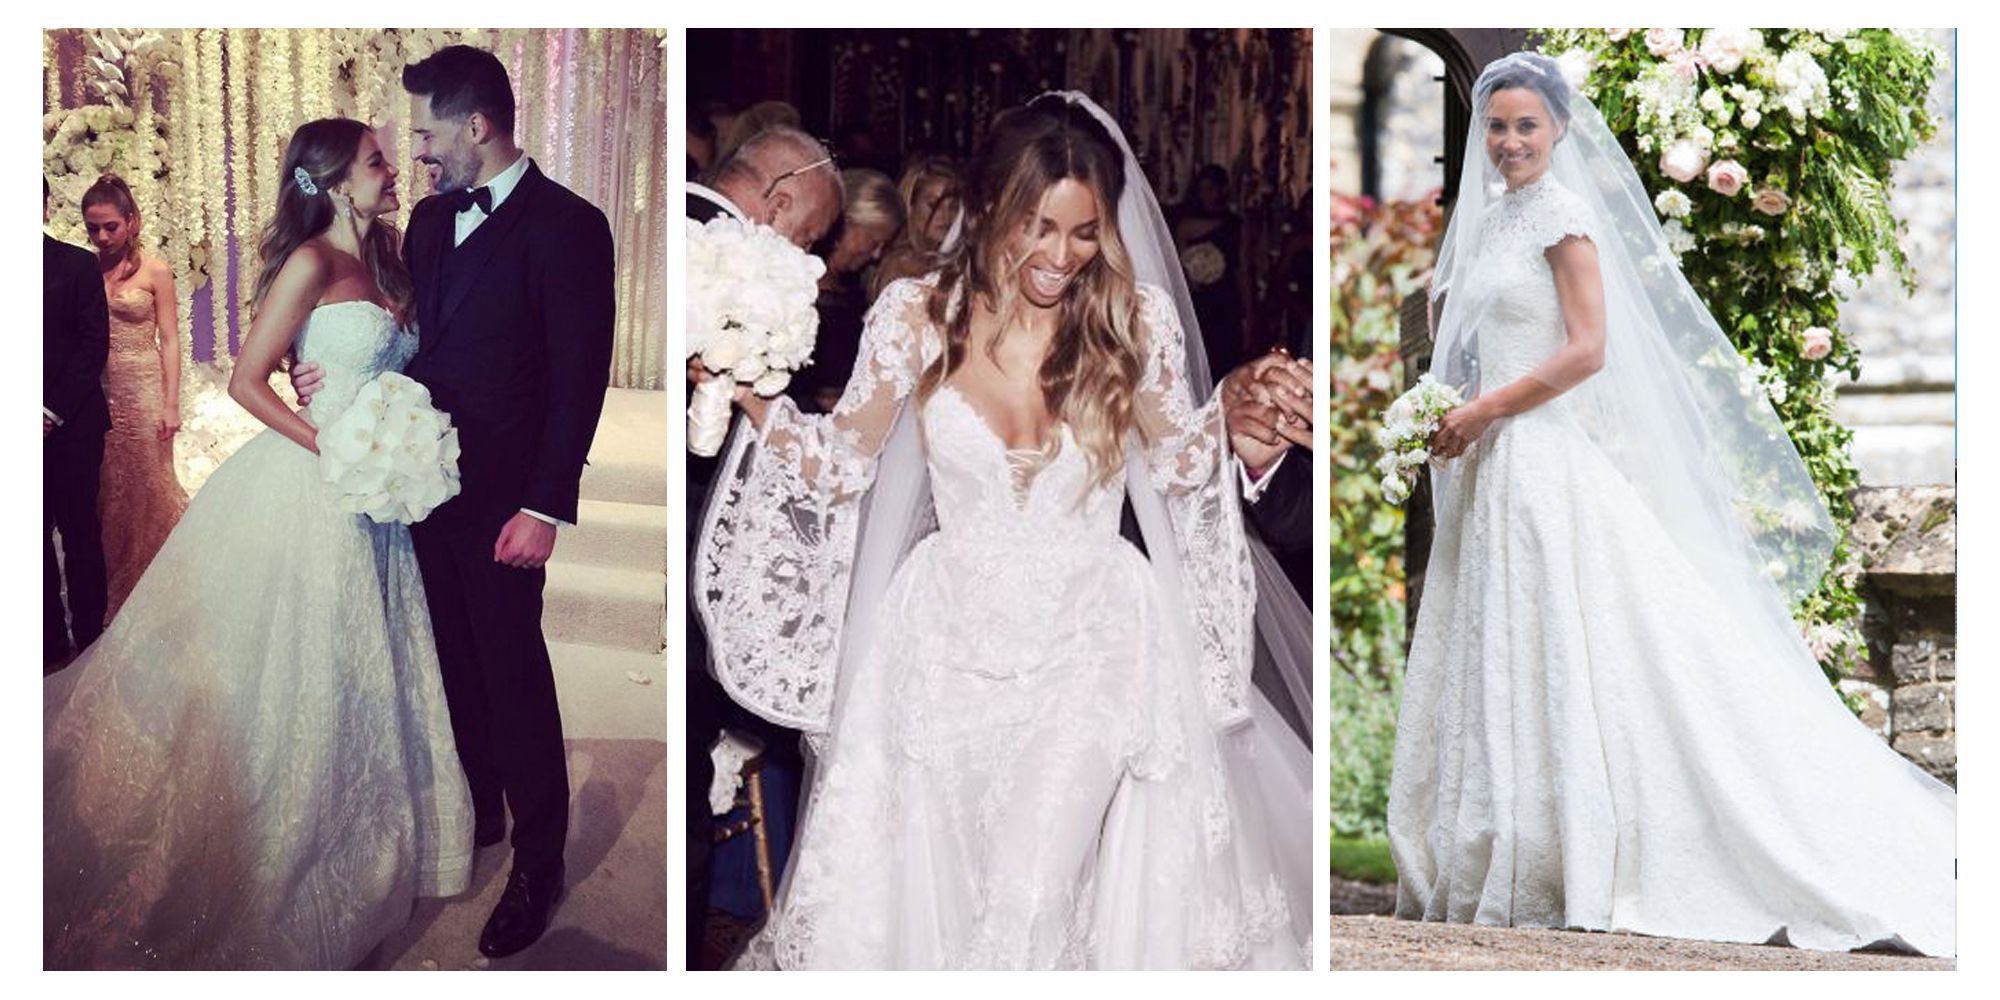 Best Celebrity Wedding Dresses - The Most Stunning Celebrity